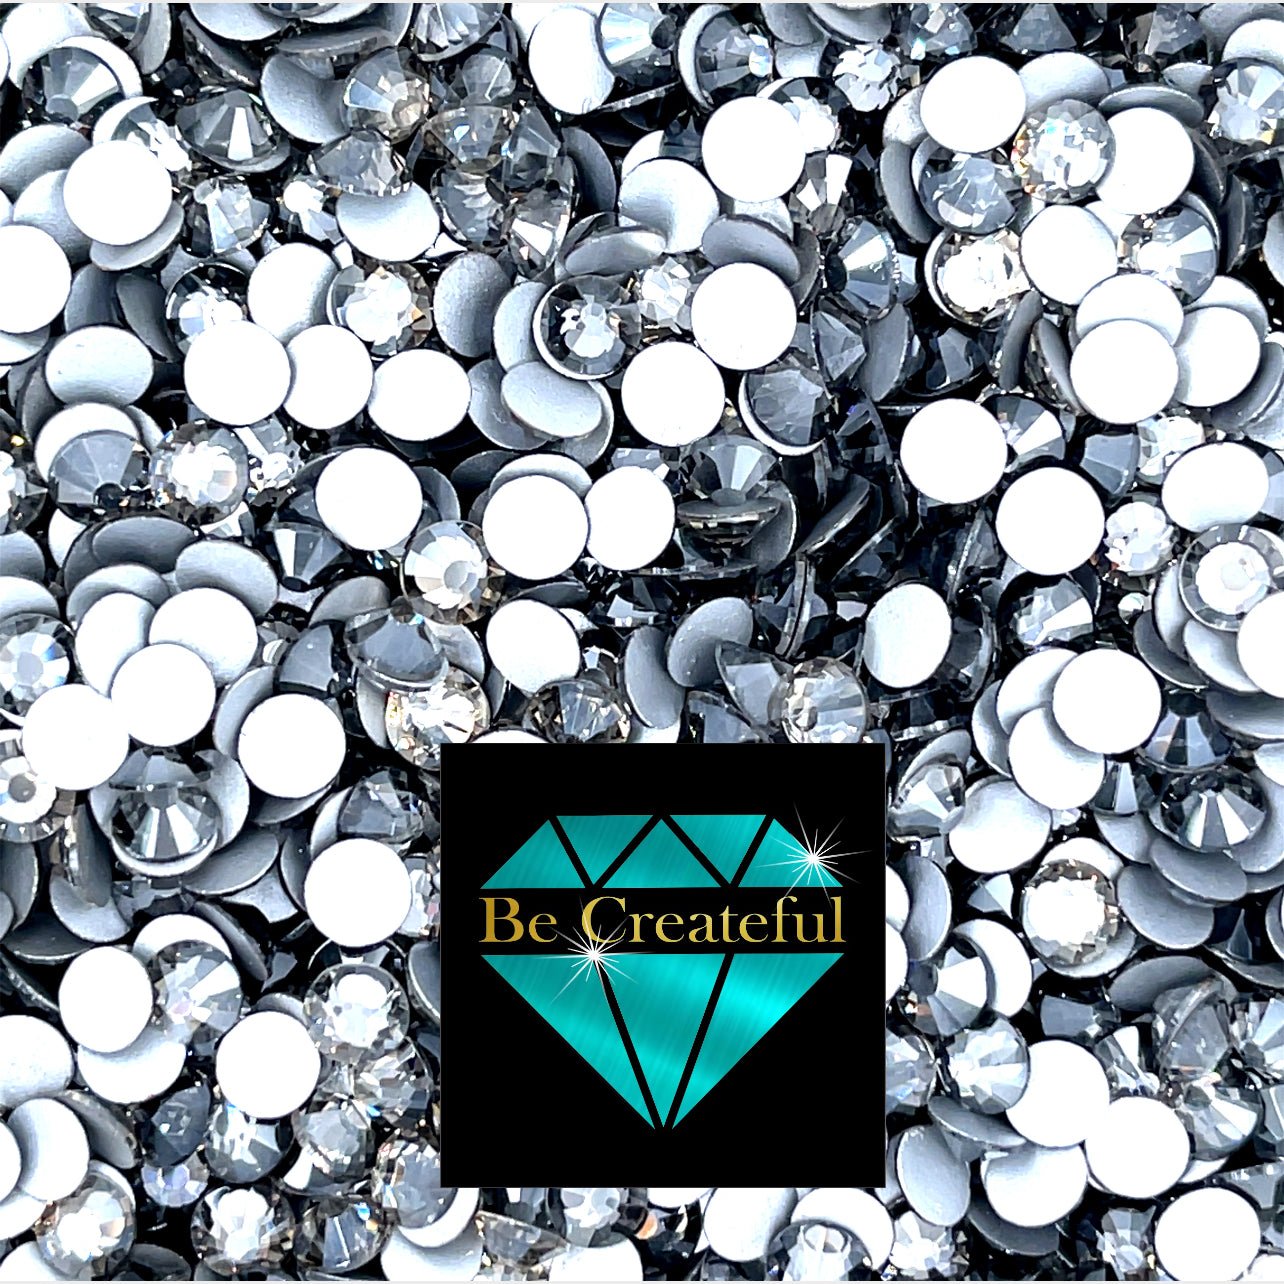 VDD SS4-SS30 Black Diamond AB Top Quality Glass Rhinestones Crystals  Glitter Strass Flatback Stone For Nail Art Craft Decoration